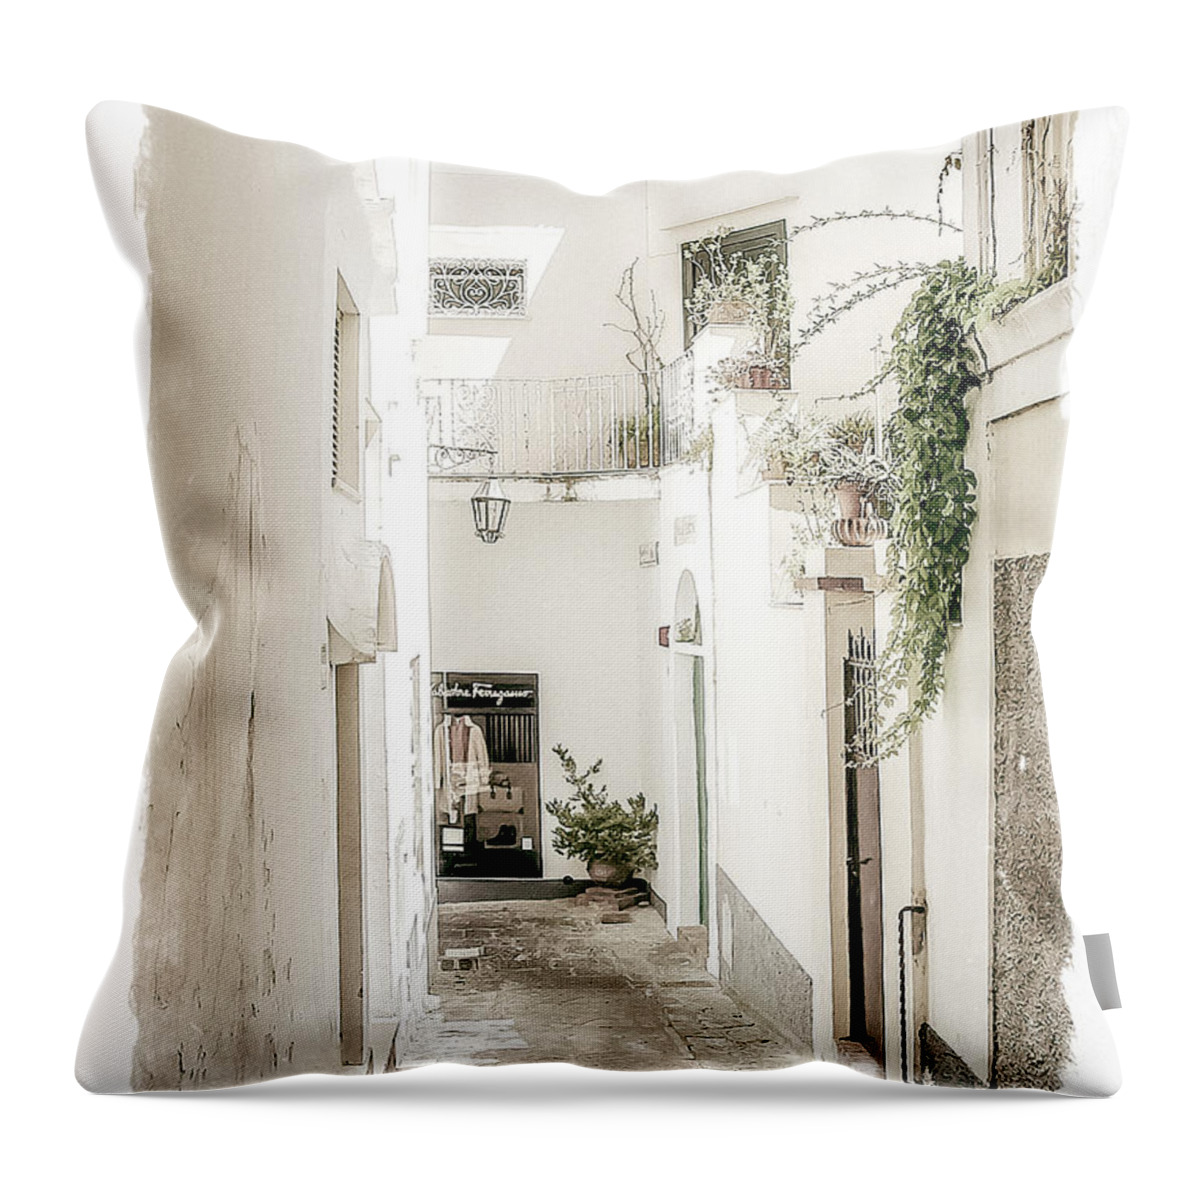 Capri Throw Pillow featuring the photograph Narrow Walkway of Capri by Julie Palencia